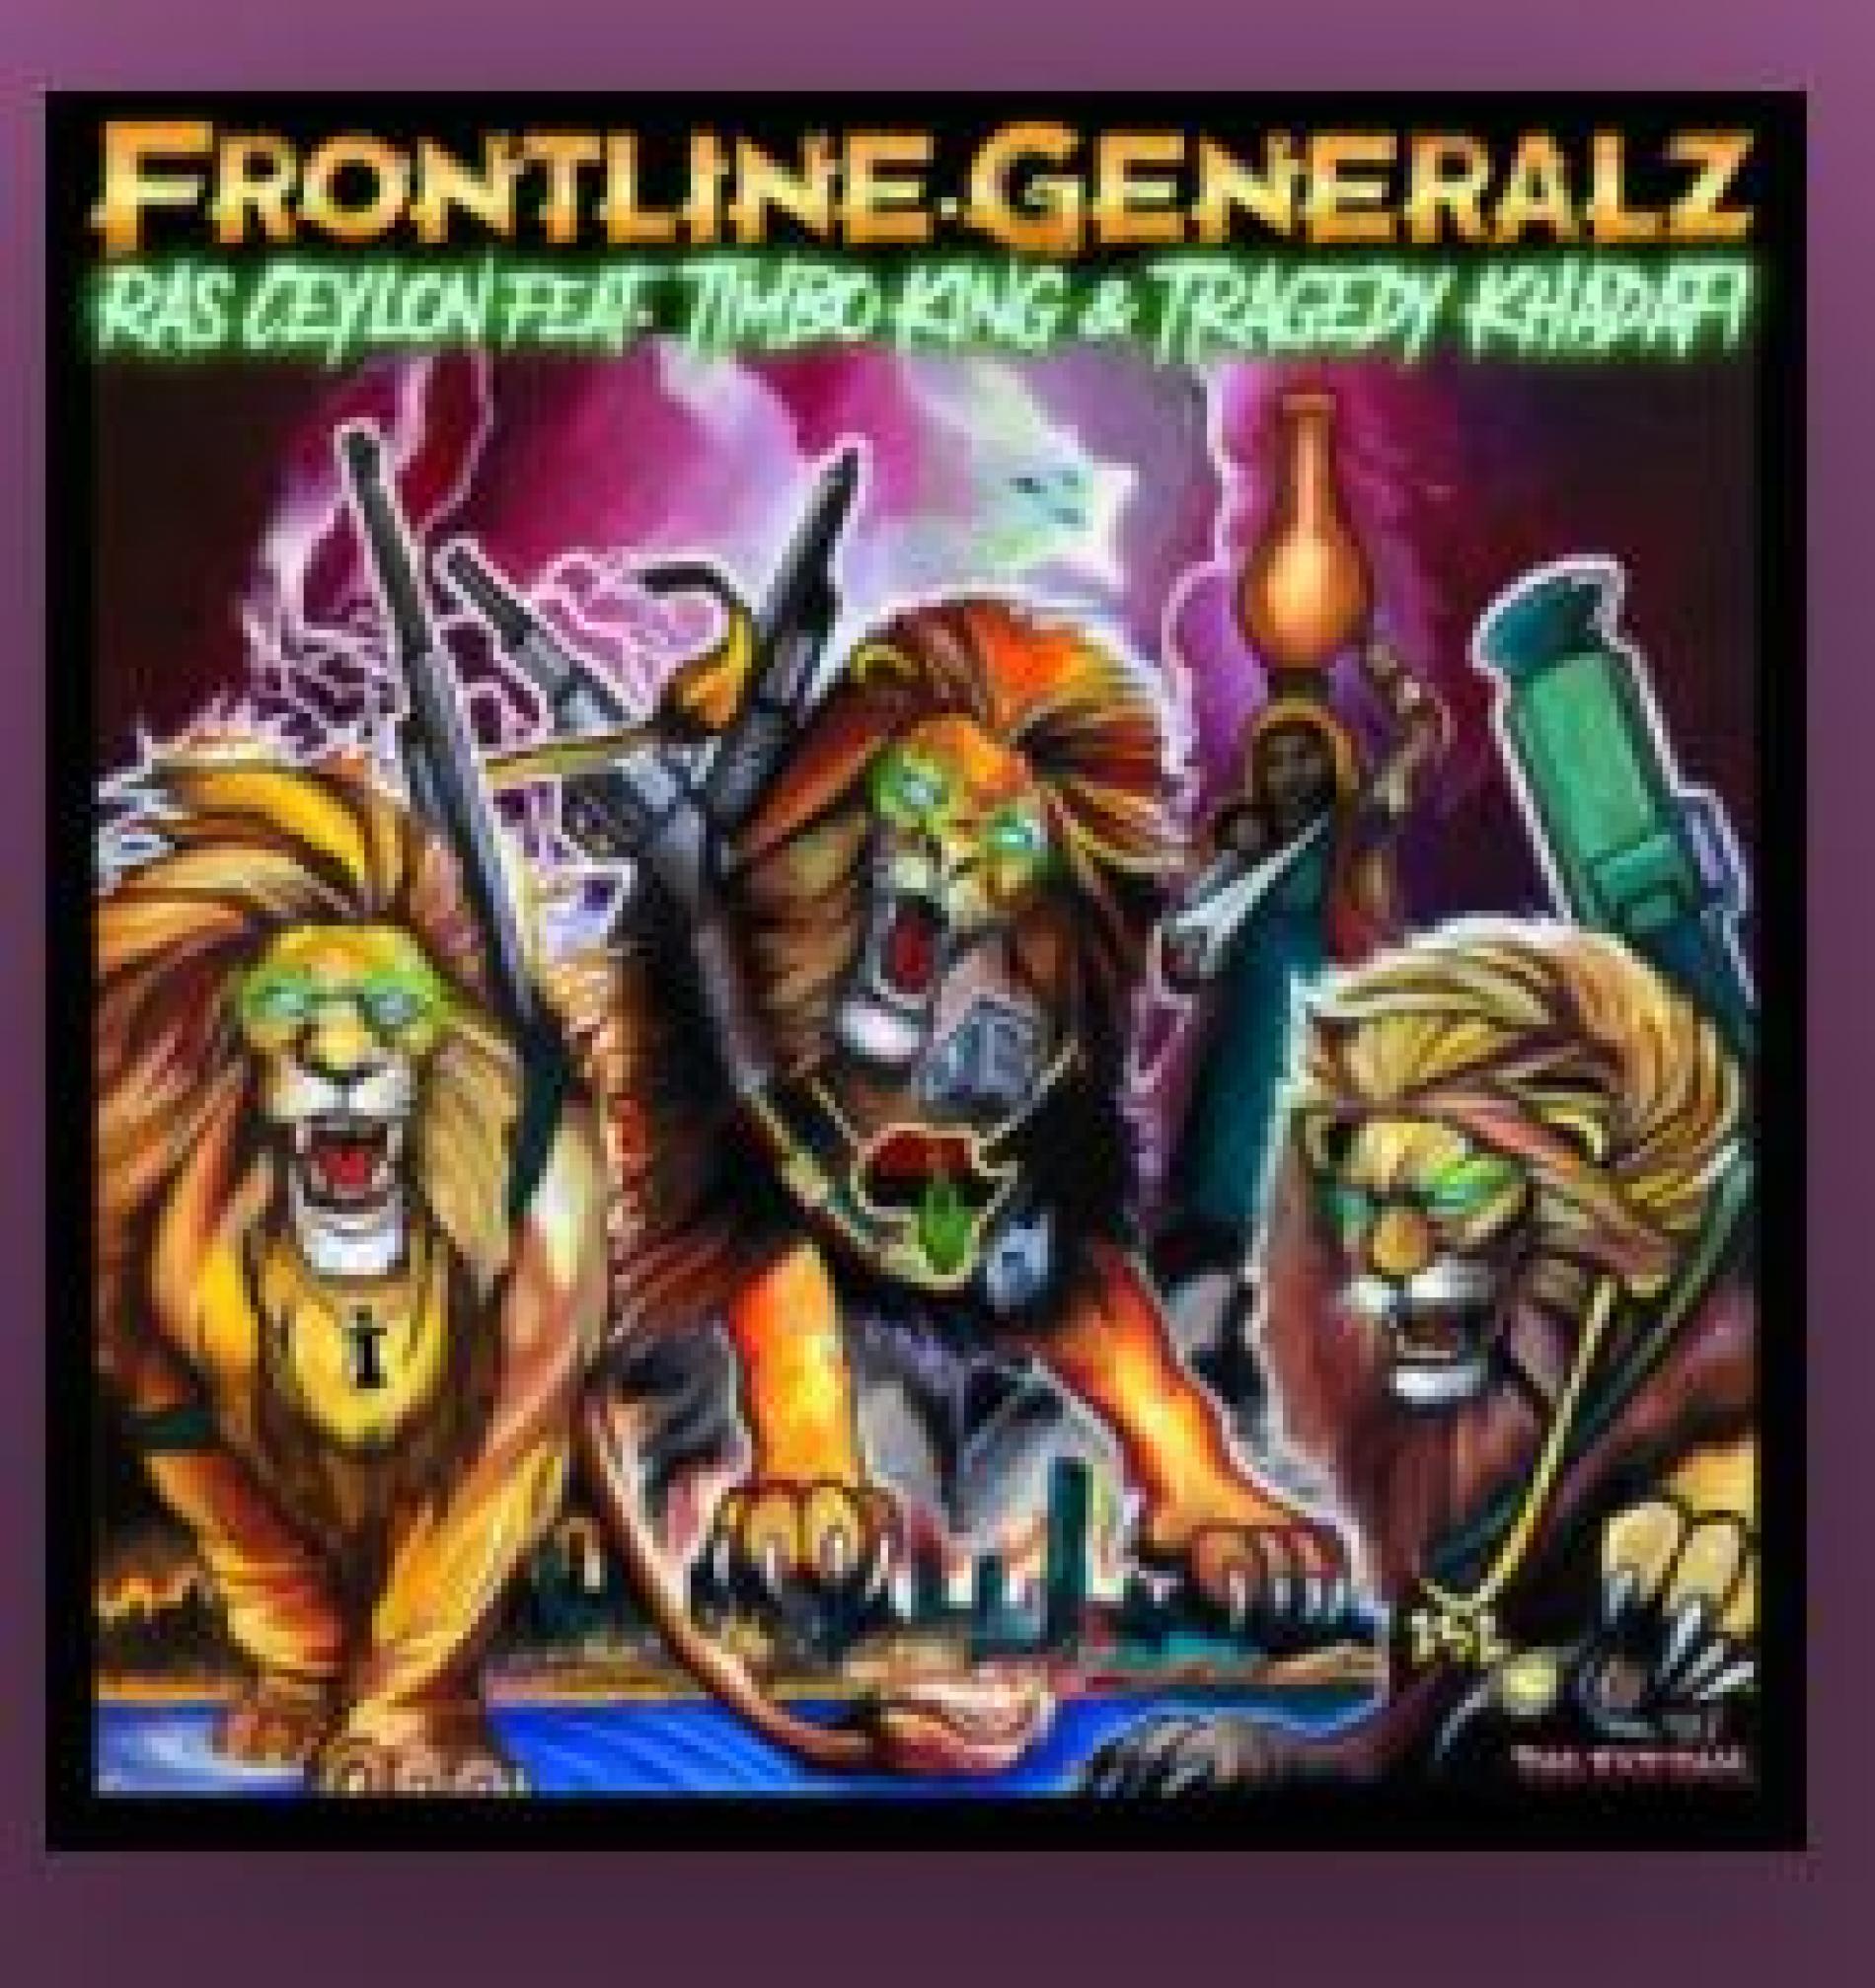 New Music : Ras Ceylon x Timbo King x Tragedy Khadafi – Frontline Generalz